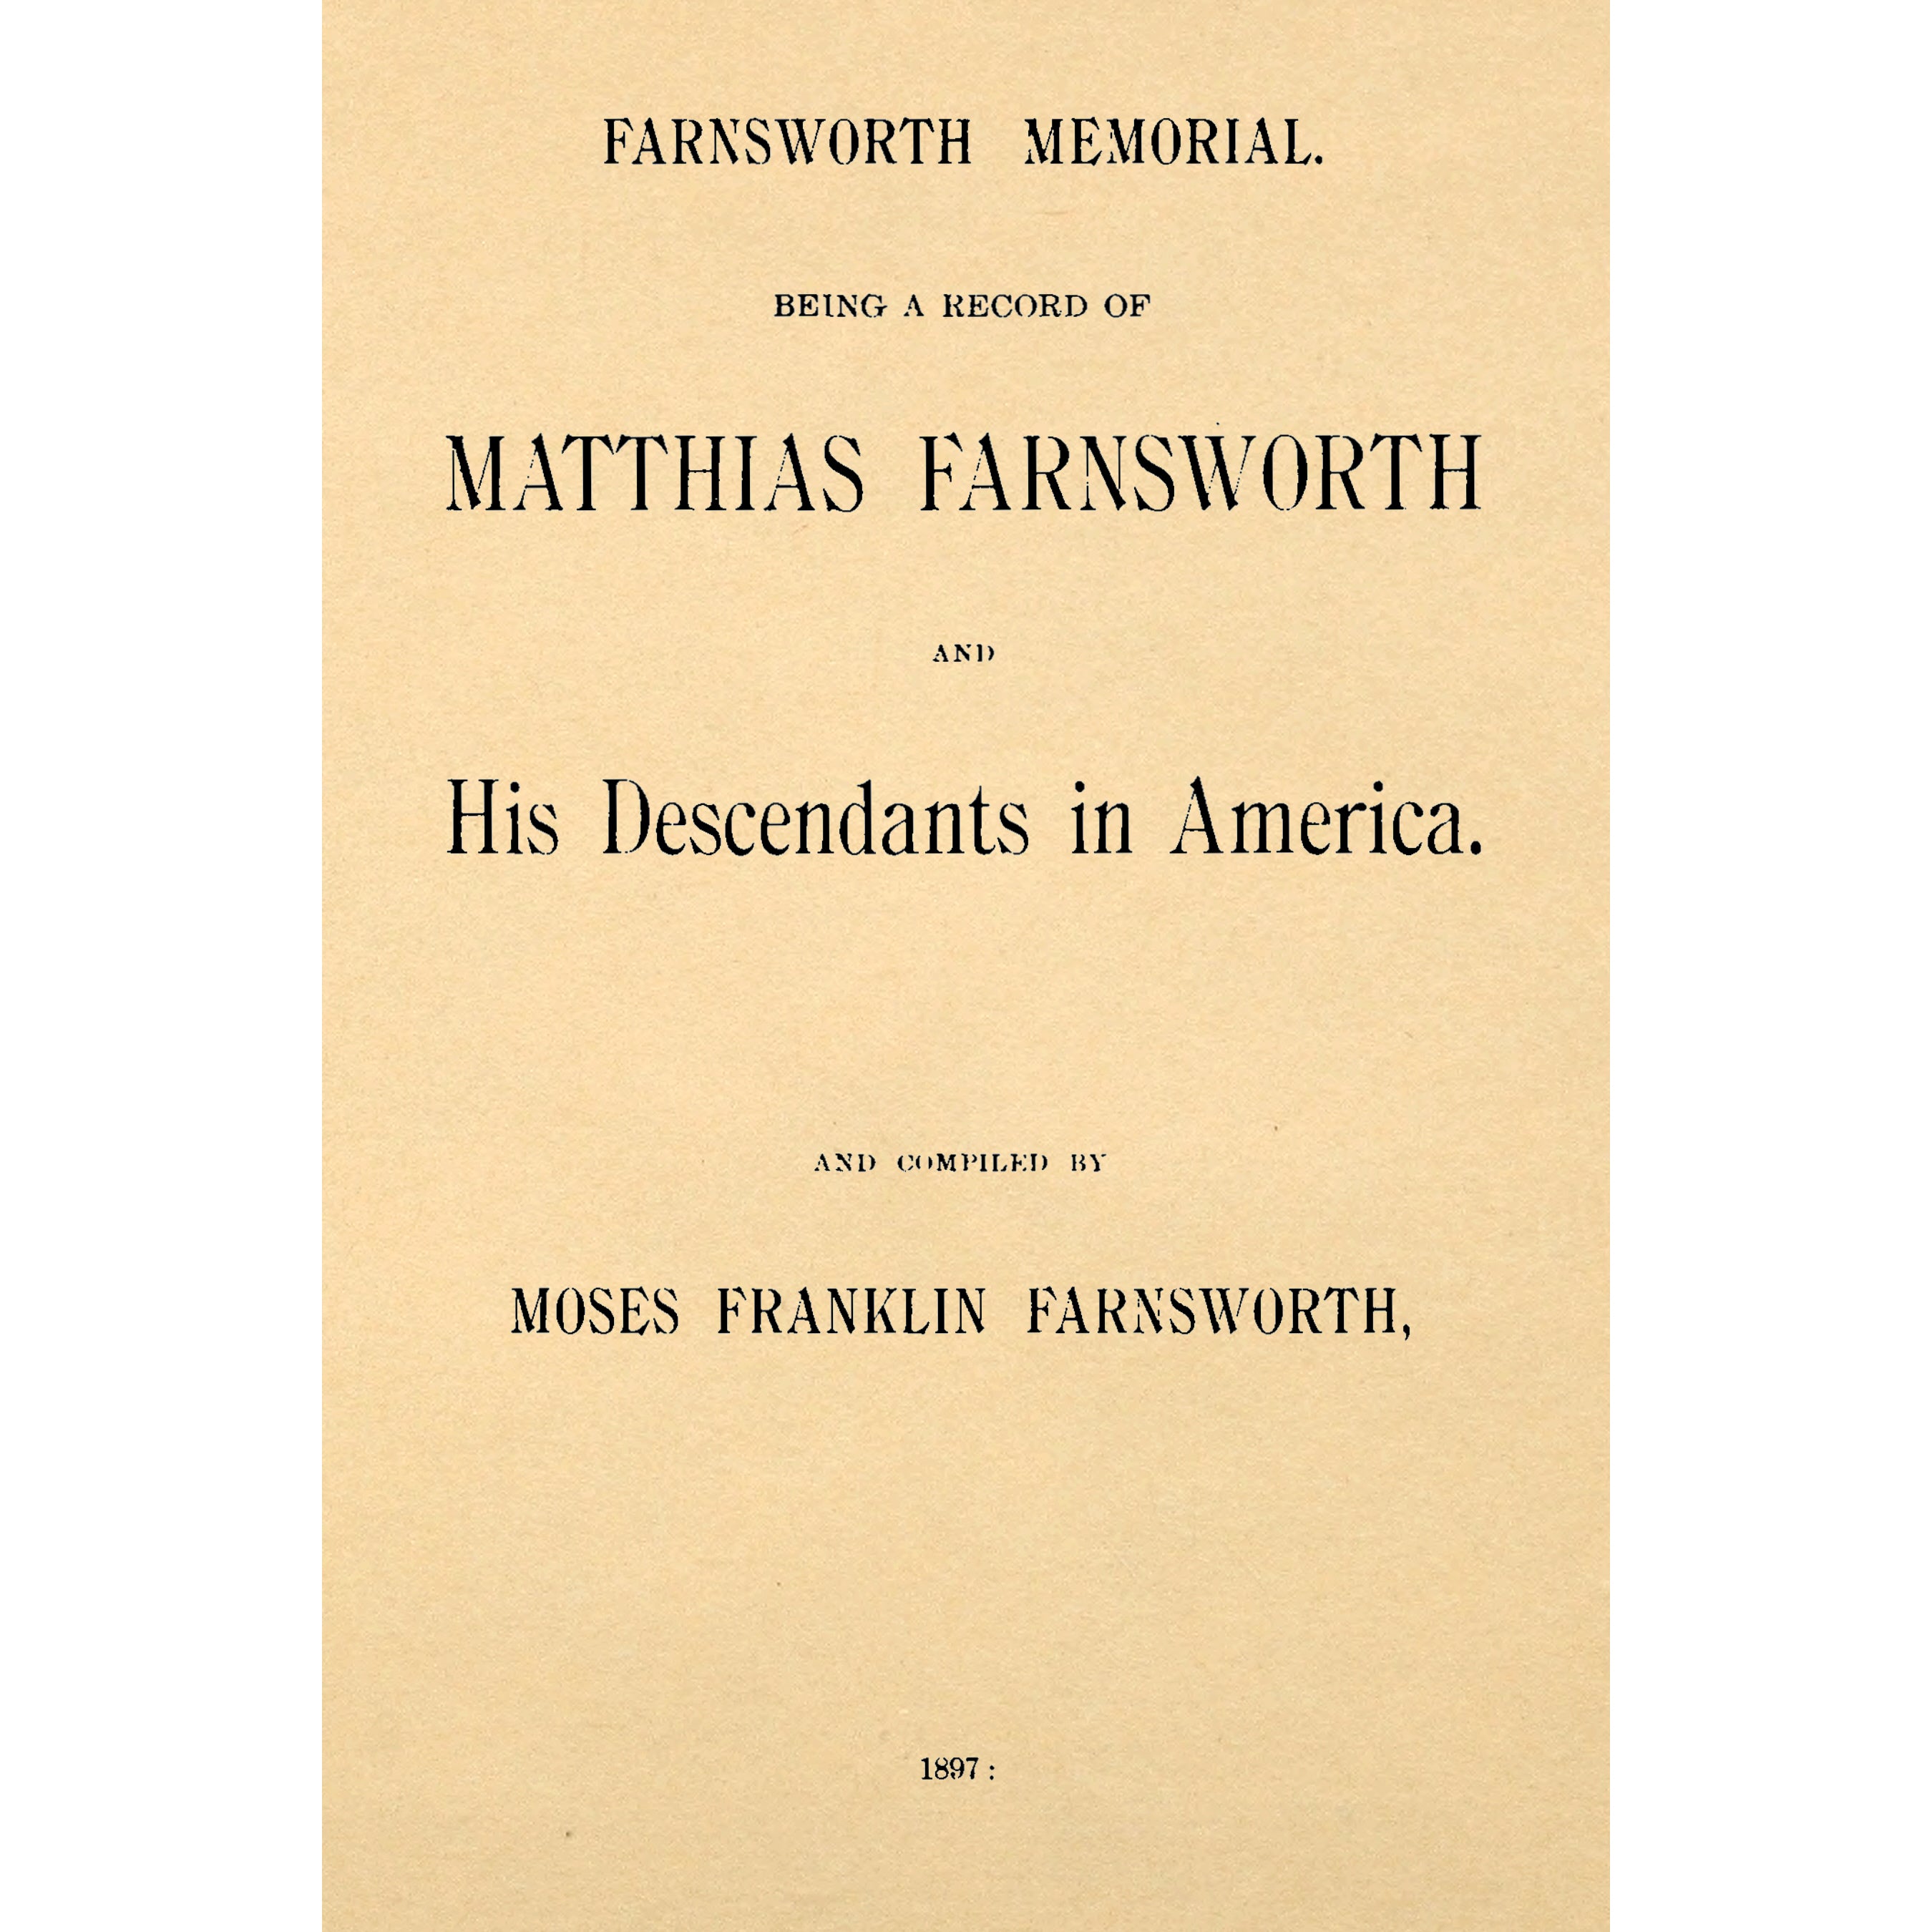 Farnsworth Memorial